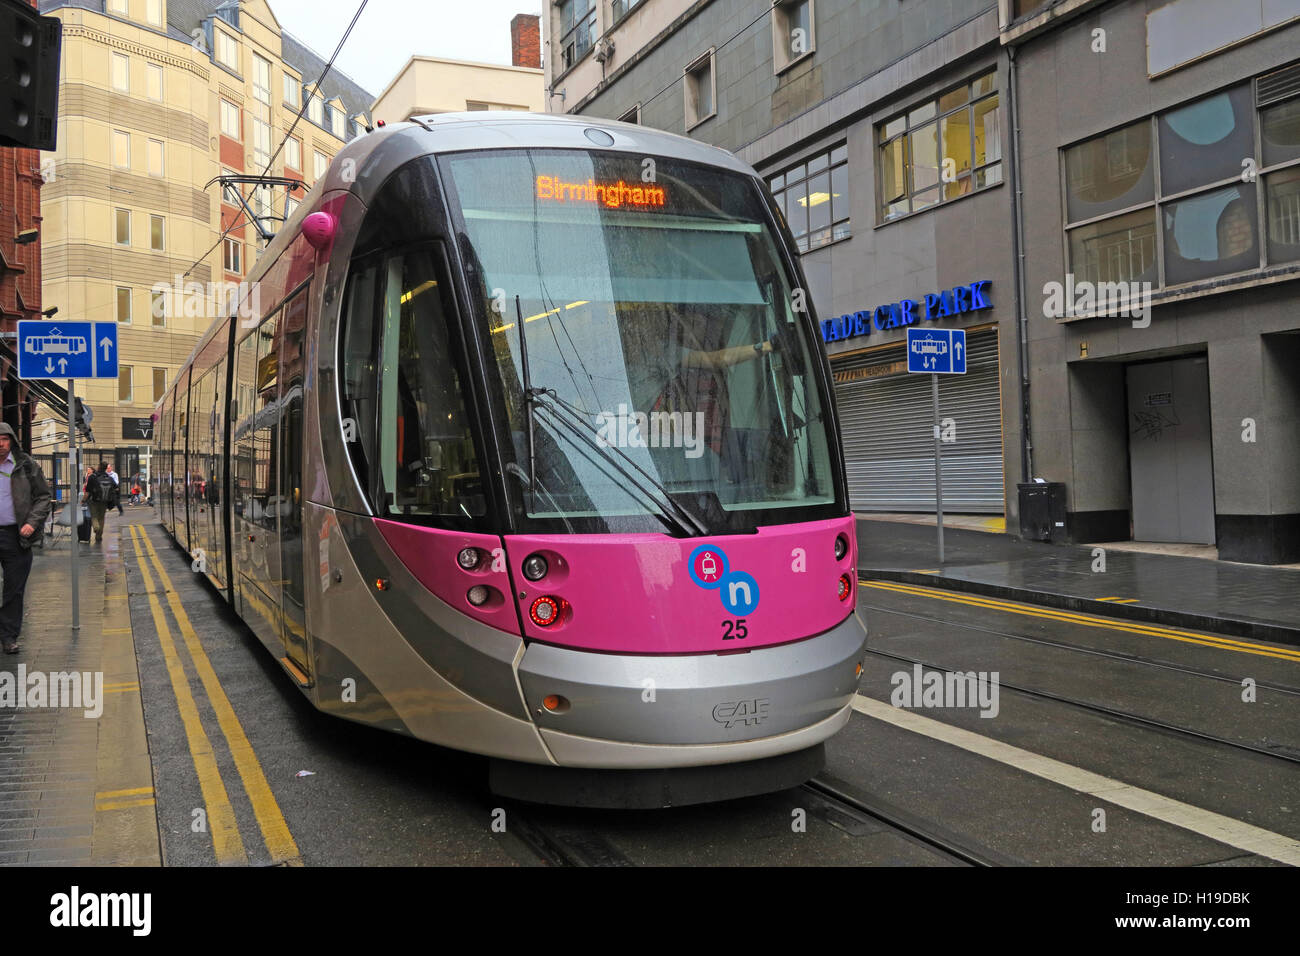 Birmingham tram Stock Photo